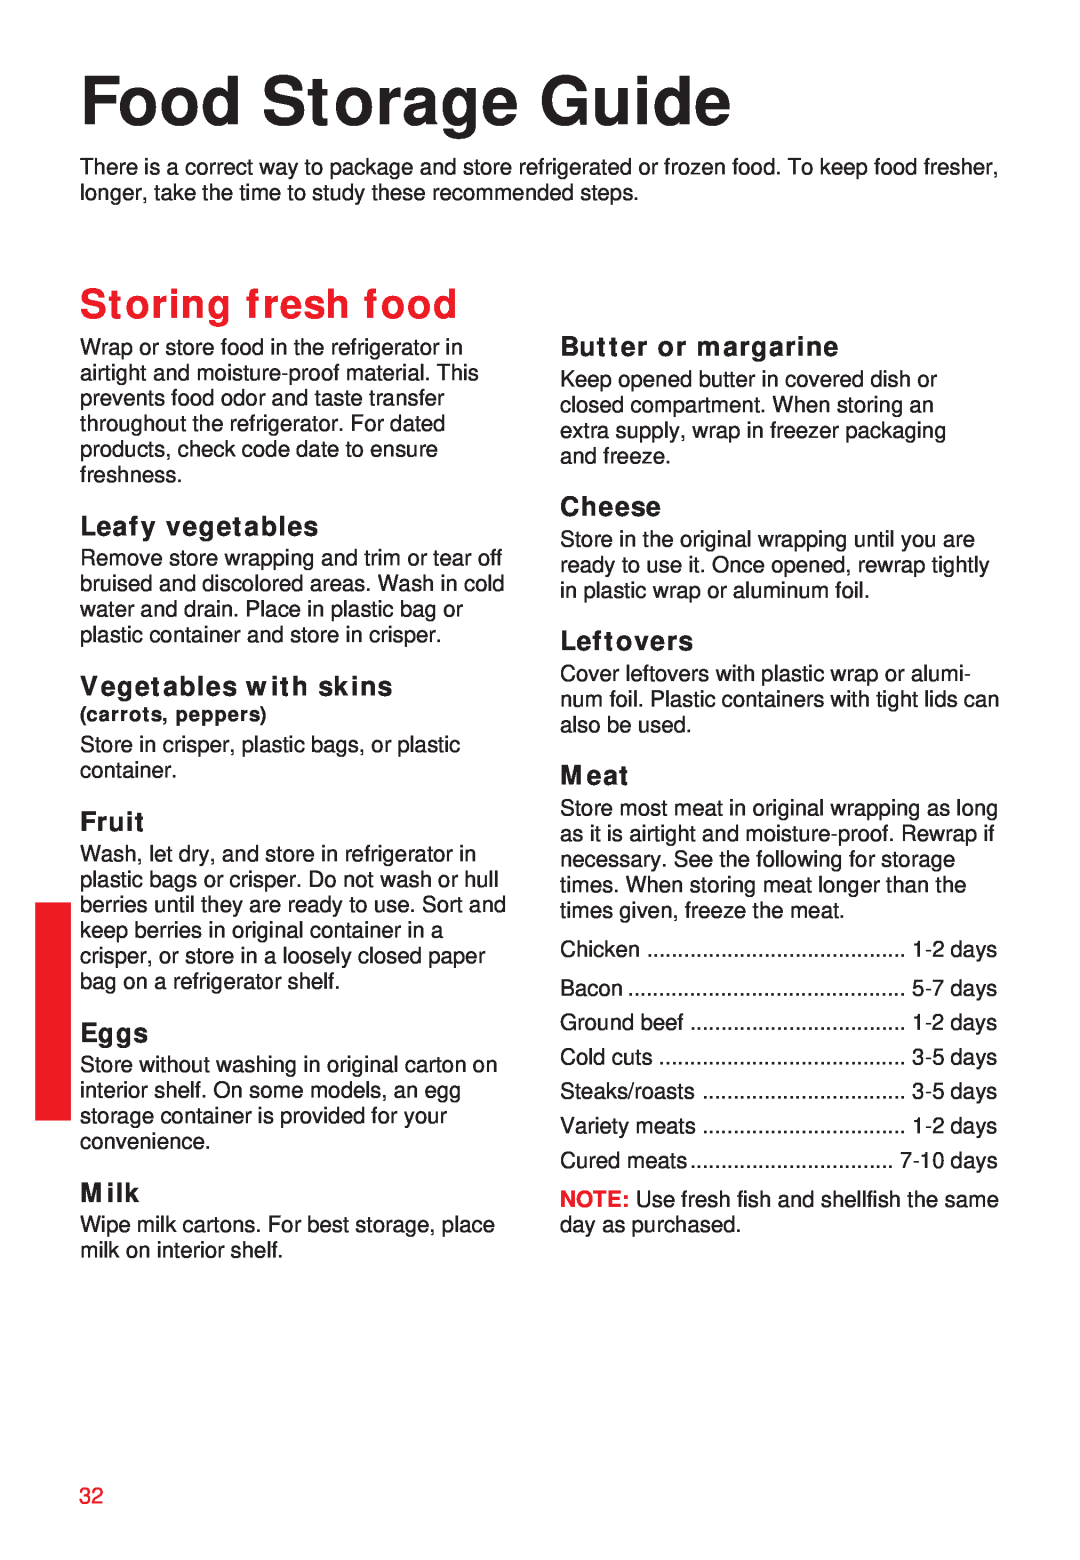 Whirlpool 2195258 Food Storage Guide, Storing fresh food, Butter or margarine, Leafy vegetables, Vegetables with skins 